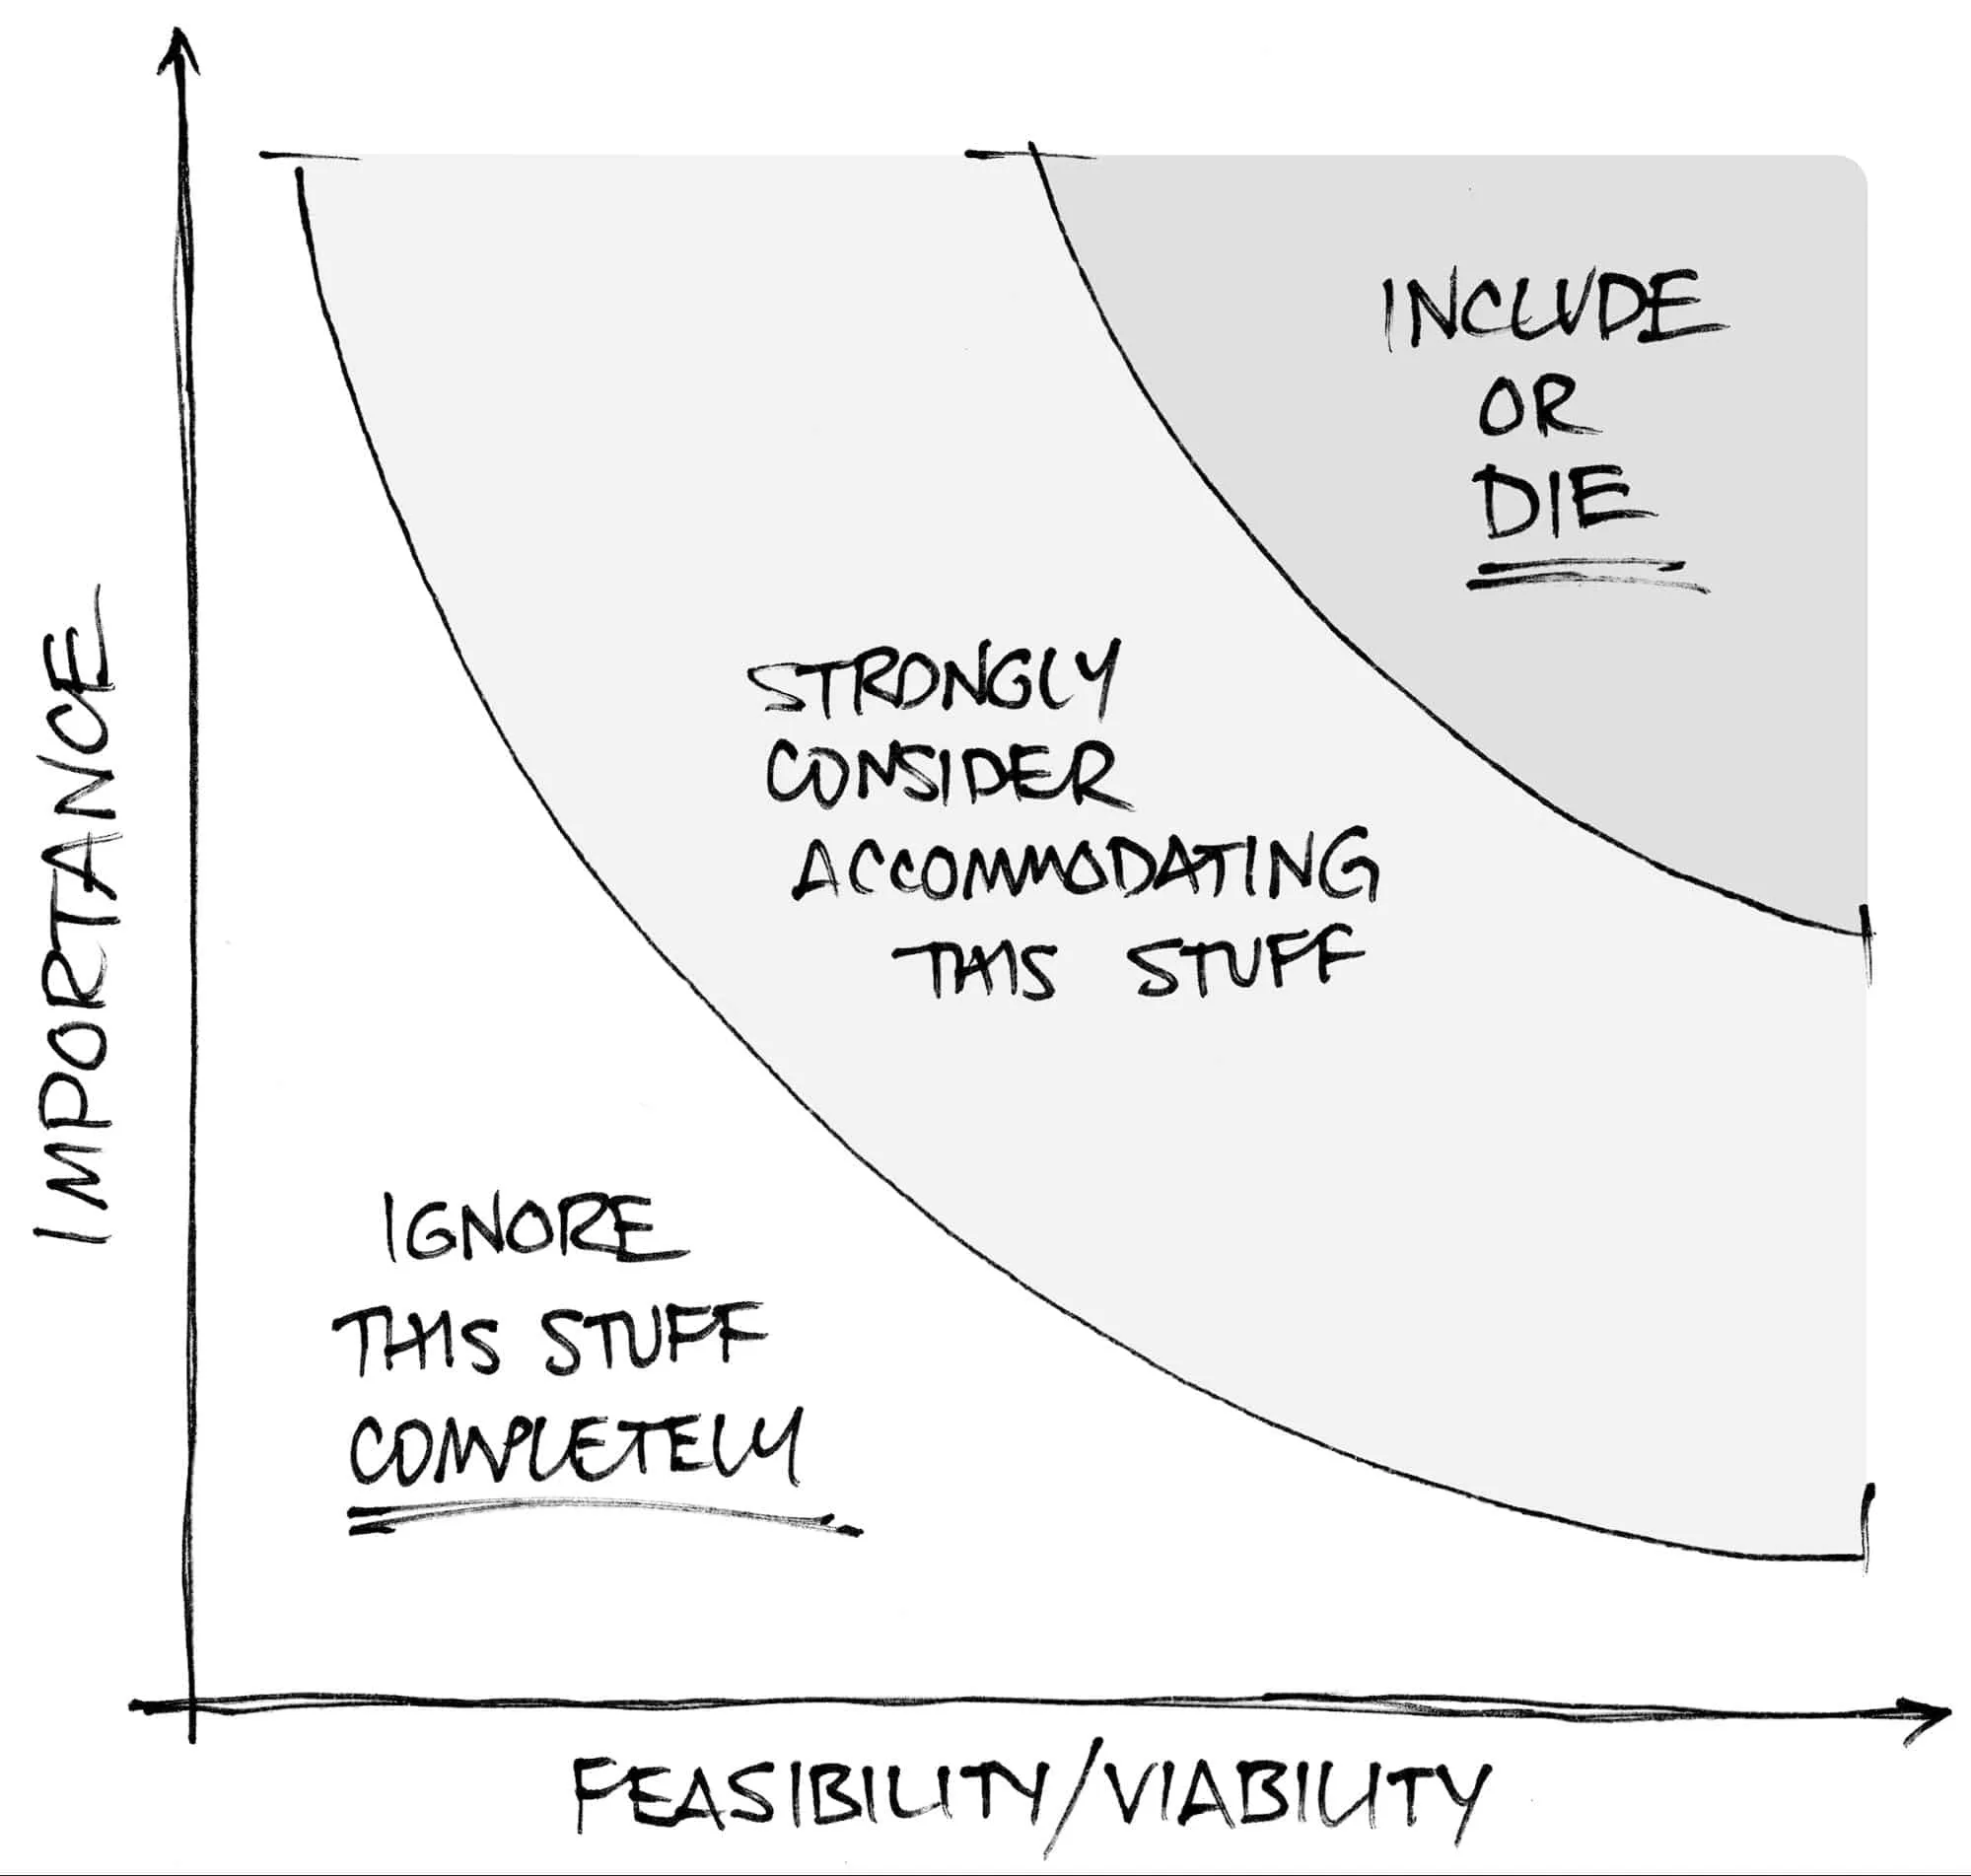 Importance versus feasibility